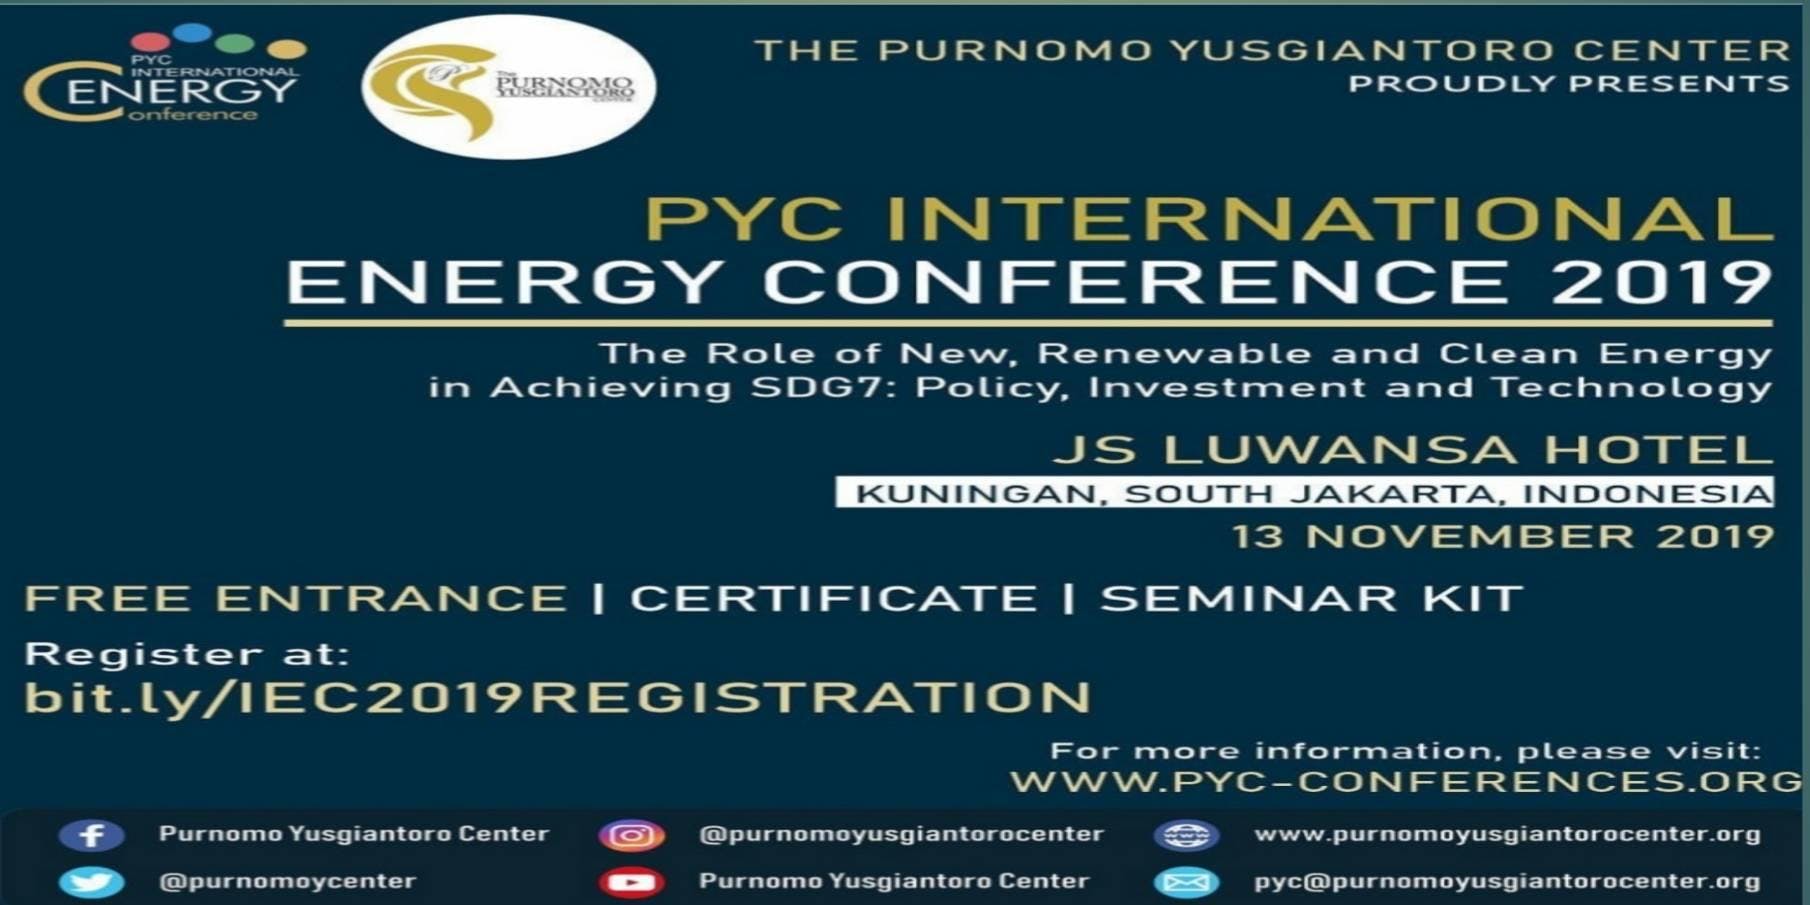 PYC INTERNATIONAL ENERGY CONFERENCE 2019